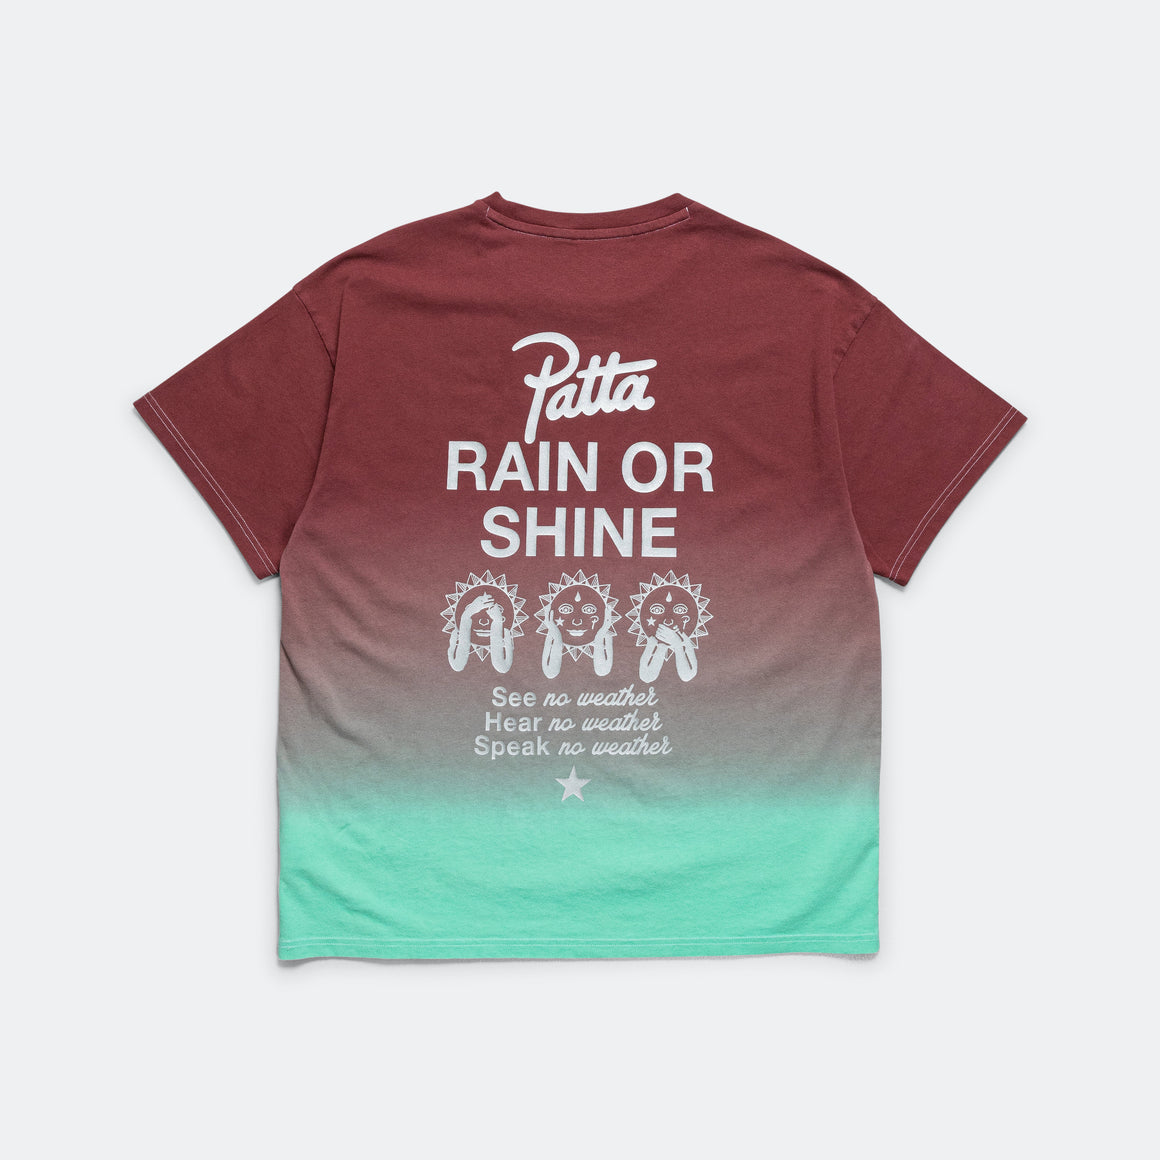 Converse - Rain or Shine T-Shirt x Patta - Gradient - UP THERE